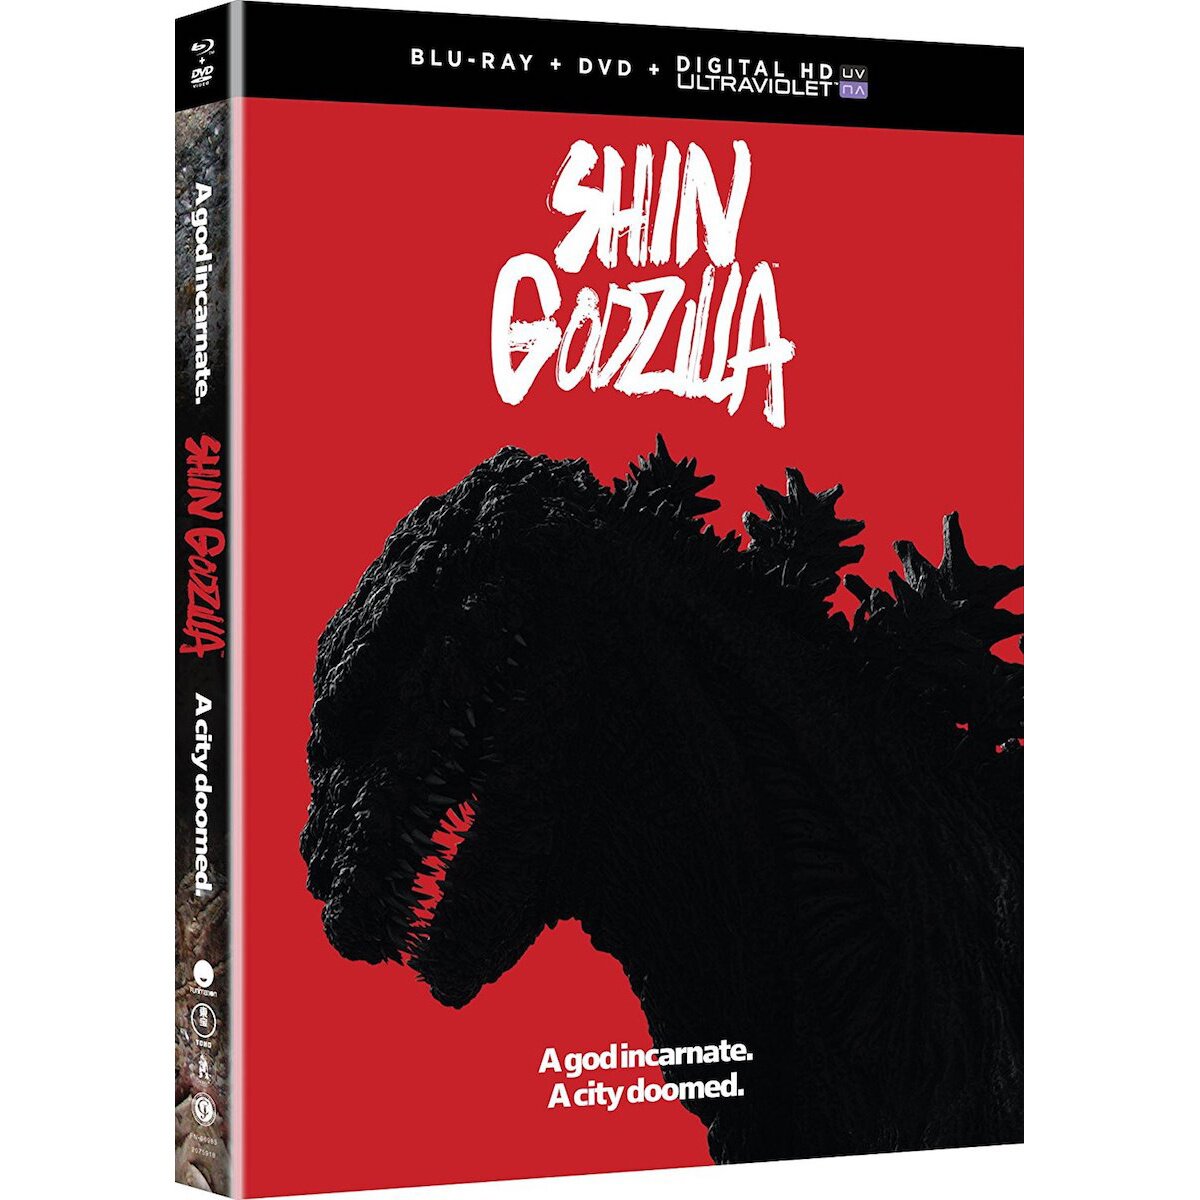 Shin Godzilla - Tokyo Otaku Mode (TOM)